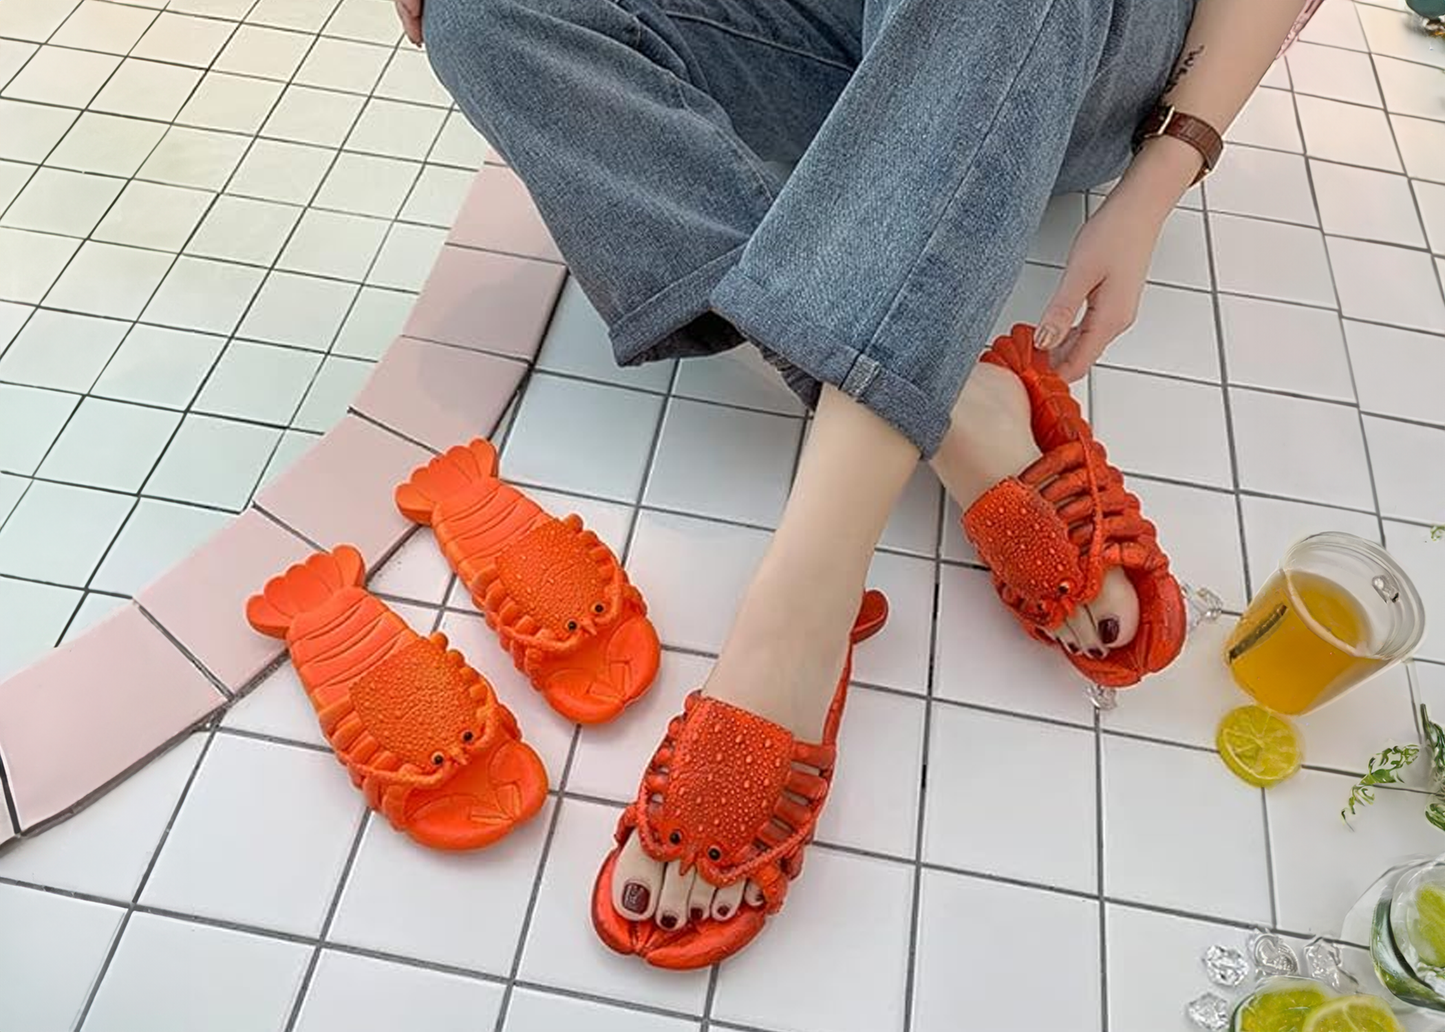 Lobster Slippers Unisex